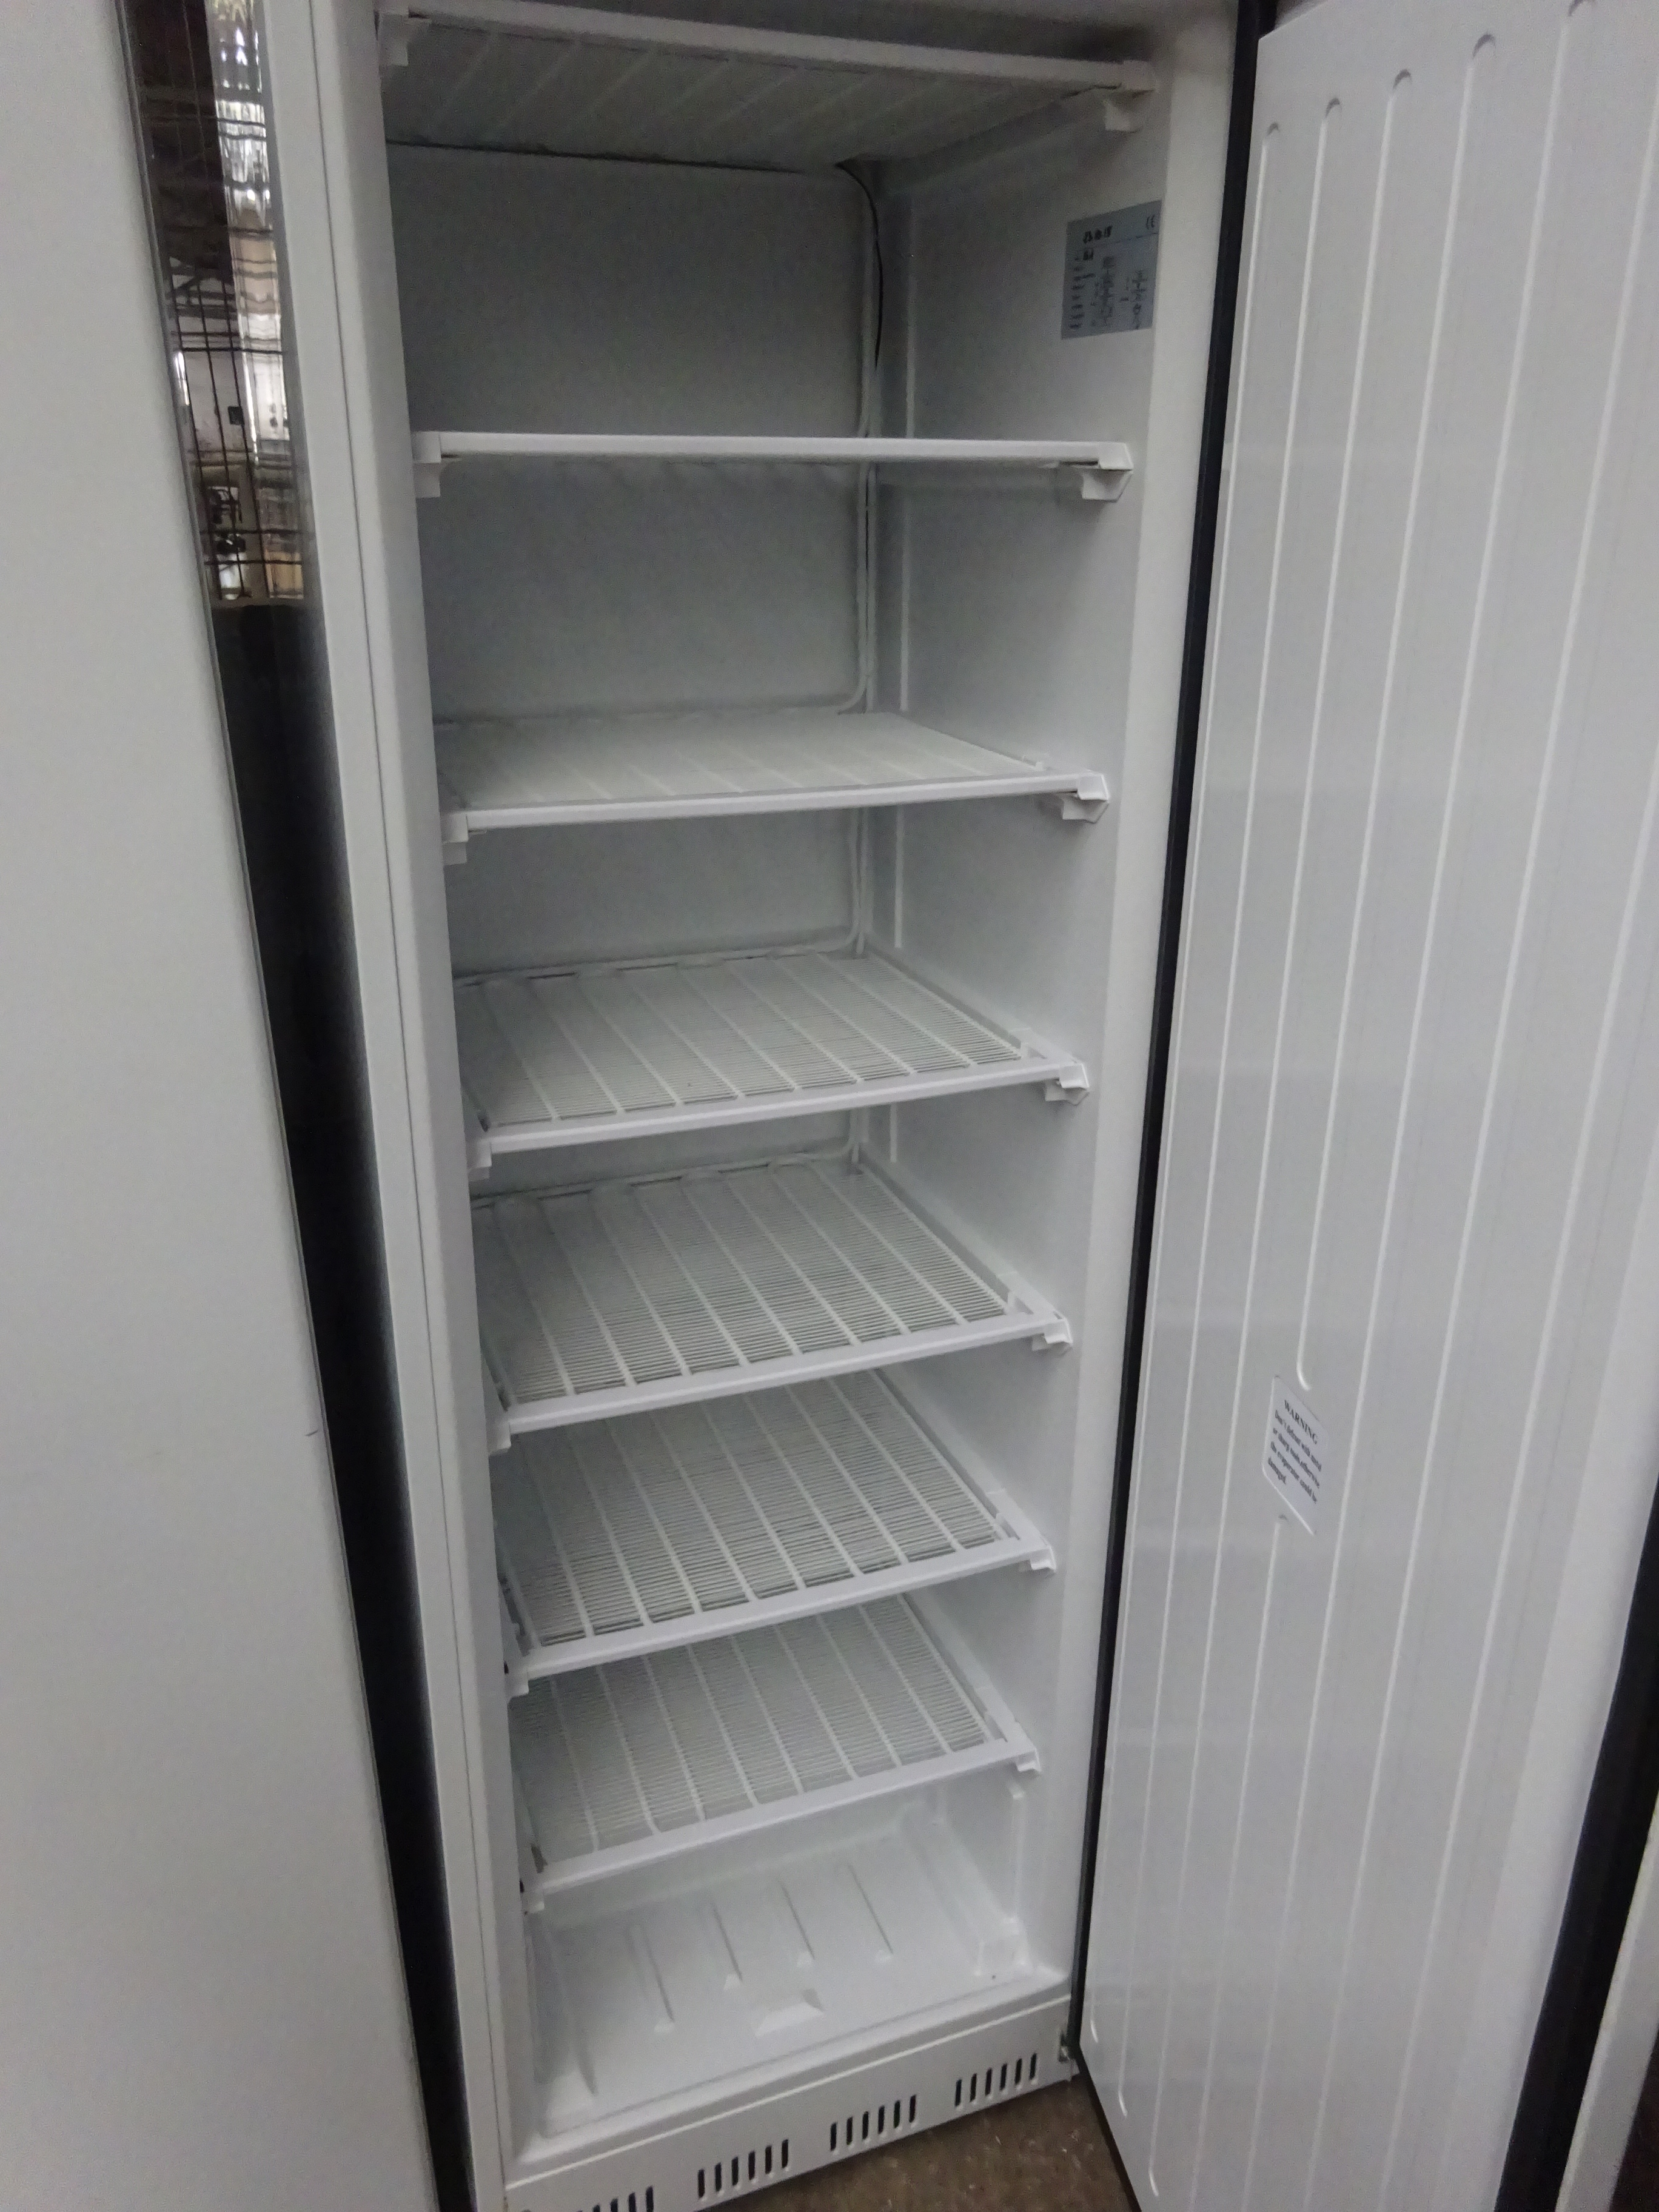 Lowe G2 single door upright freezer. - Image 2 of 2